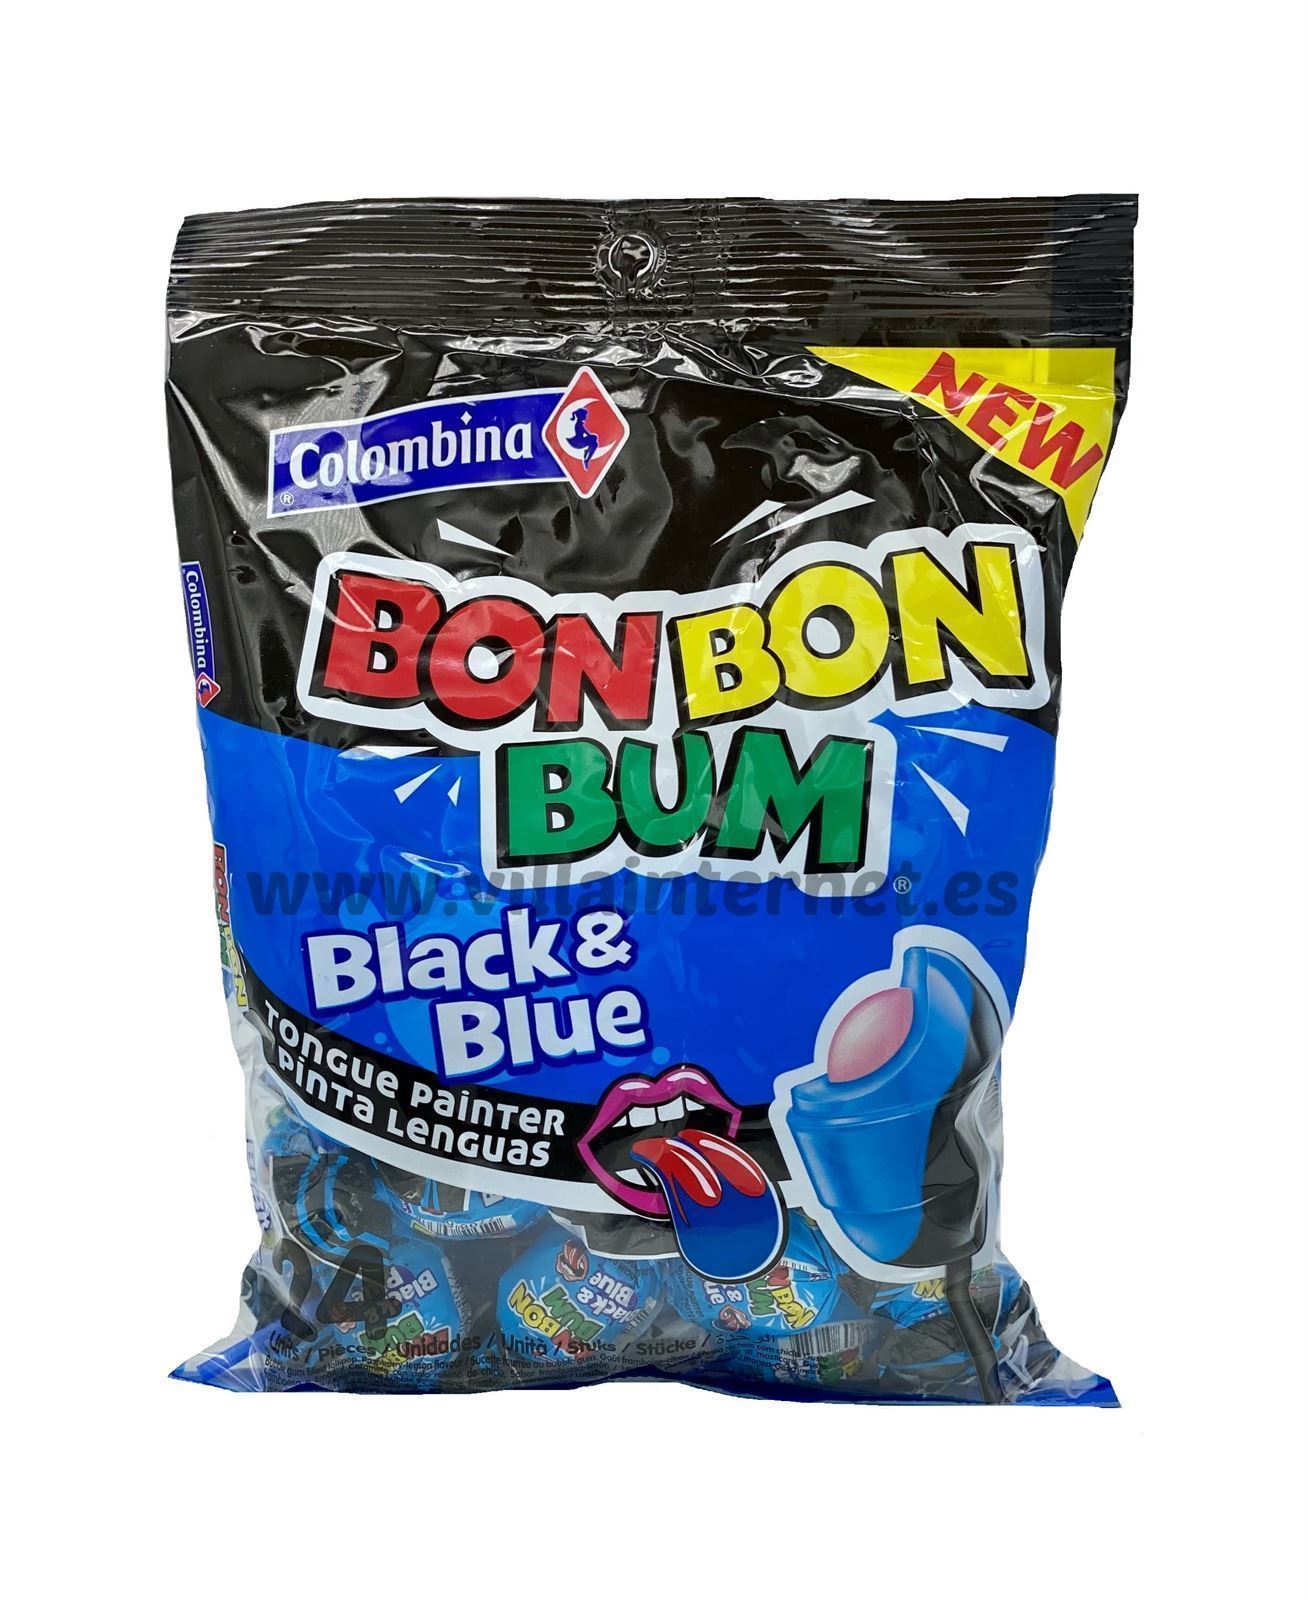 Bon Bon Bum sabor black&blue 24uds. - Imagen 1